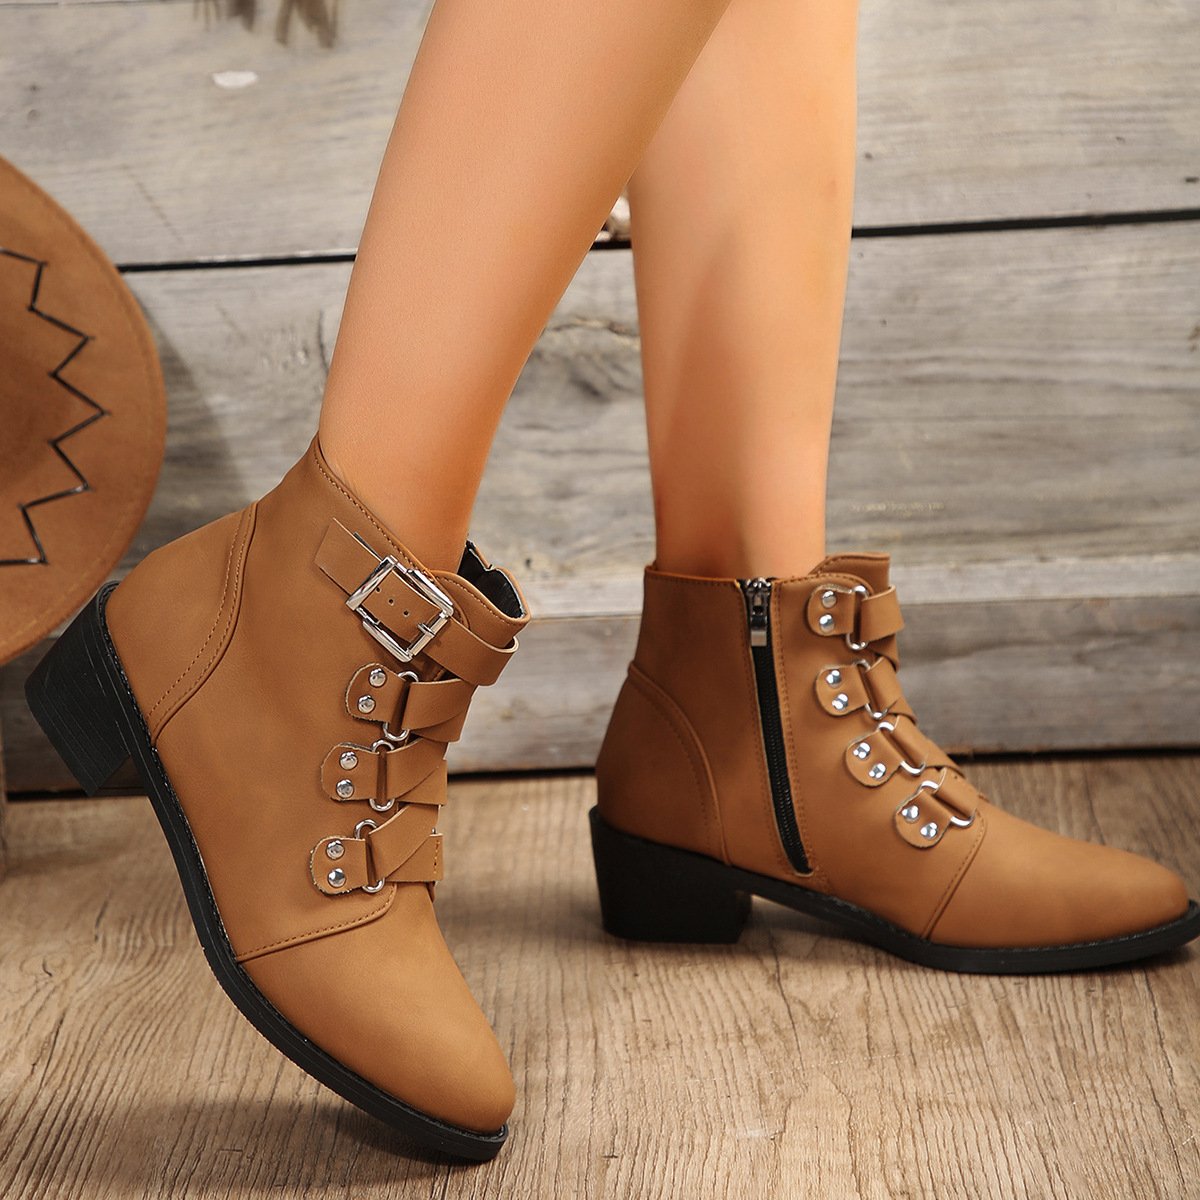 Women's Leather Orthopedic Boots